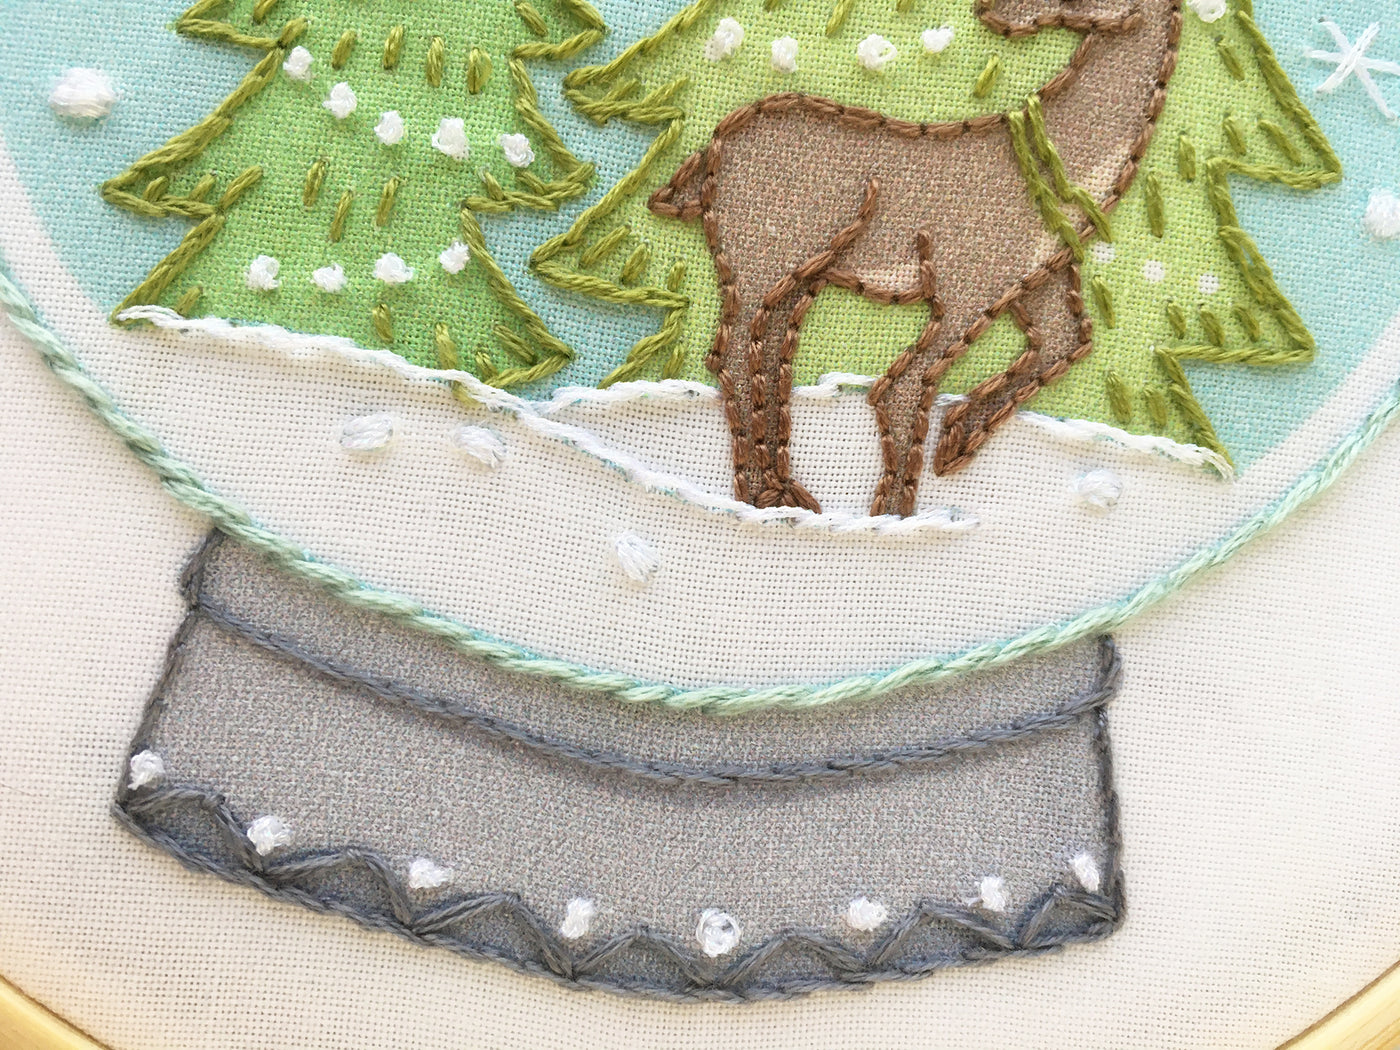 Christmas Snow Globe Hand Embroidery fabric sampler